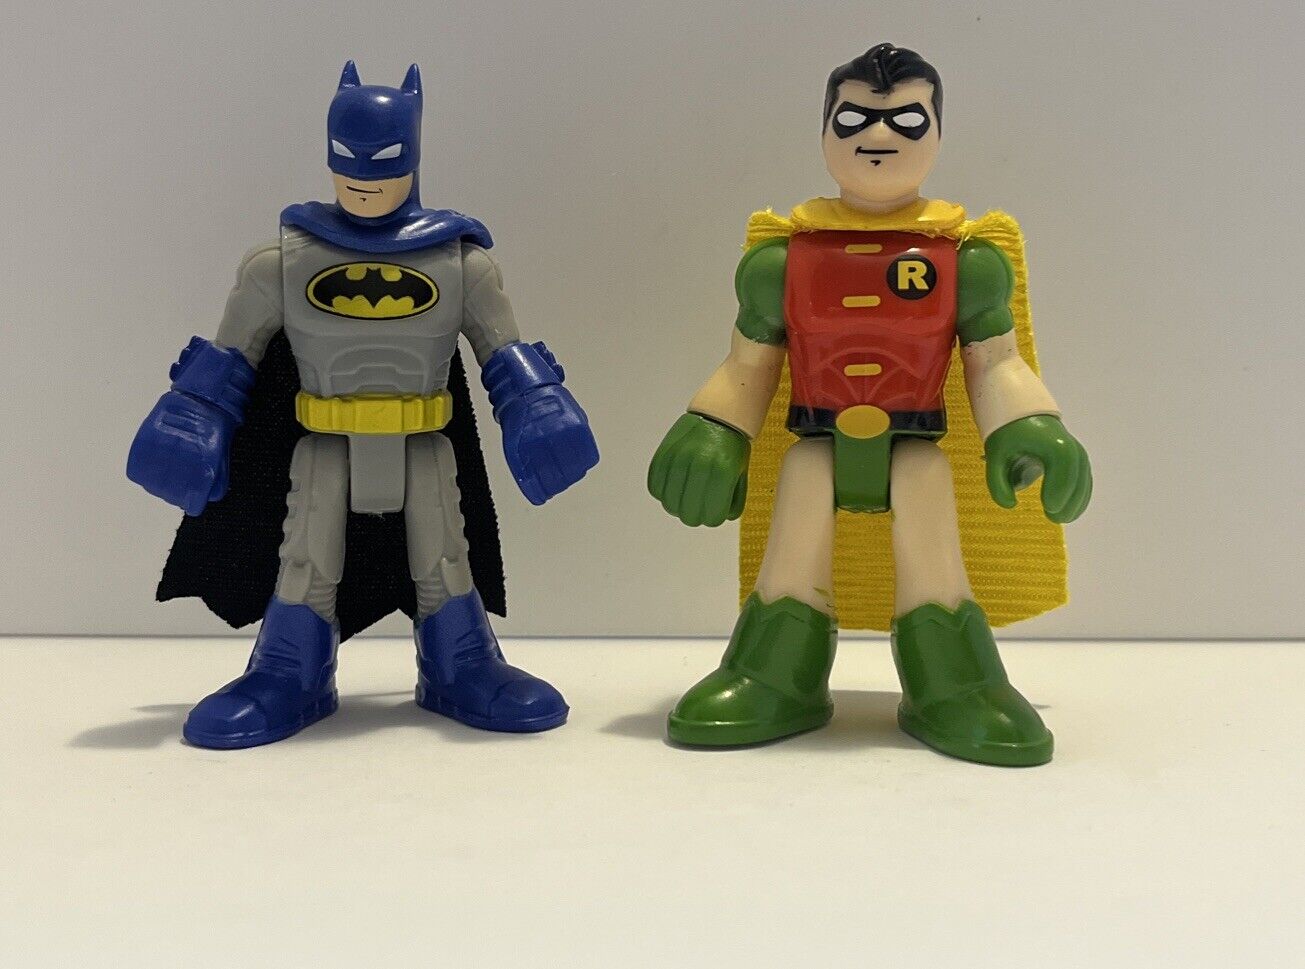 DC super friends Batman and Robin 3 inch figures